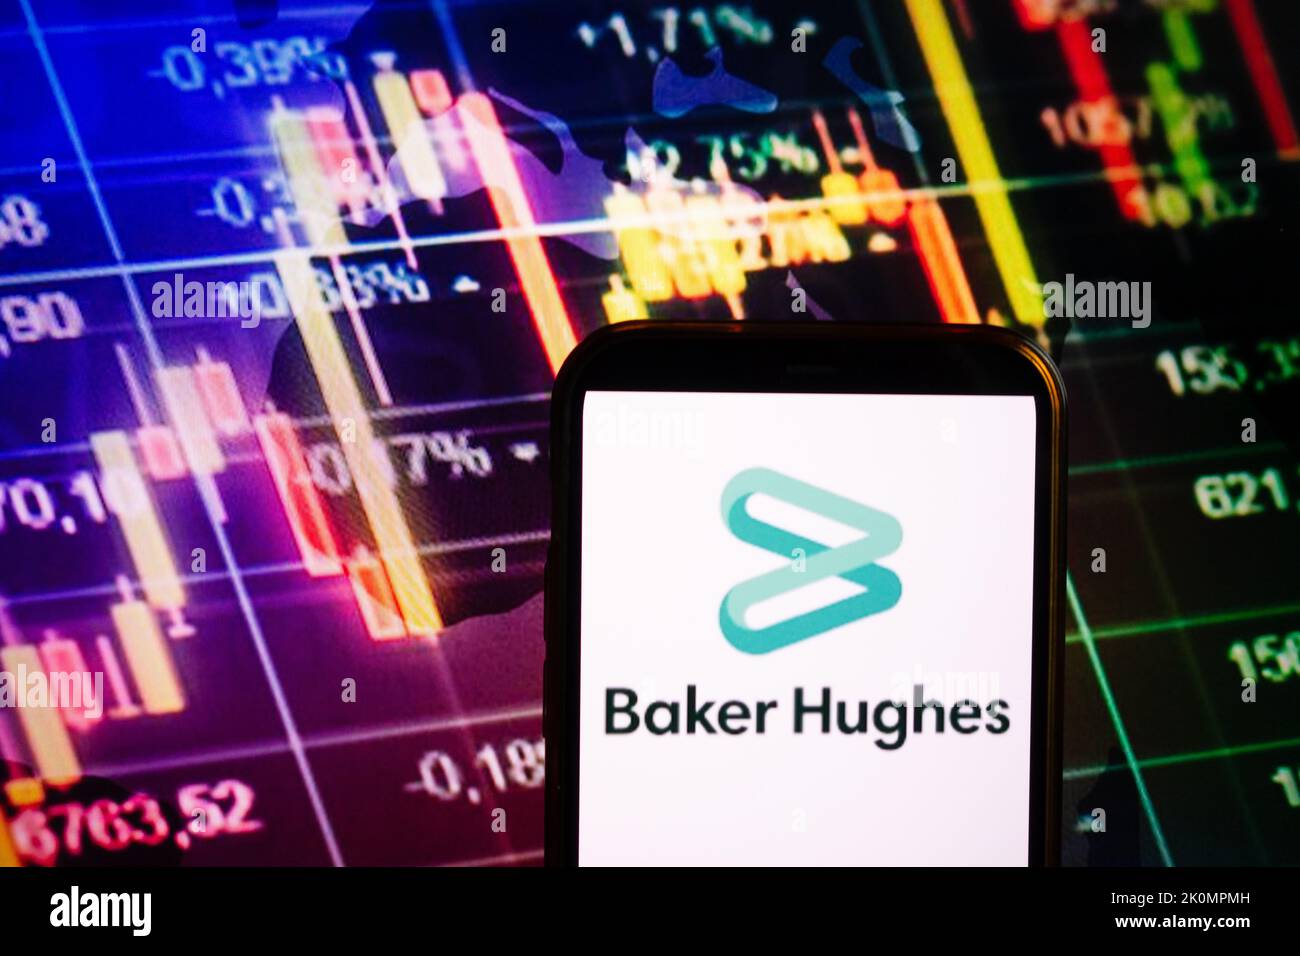 KONSKIE, POLAND - September 10, 2022: Smartphone displaying logo of Baker Hughes company on stock exchange diagram background Stock Photo